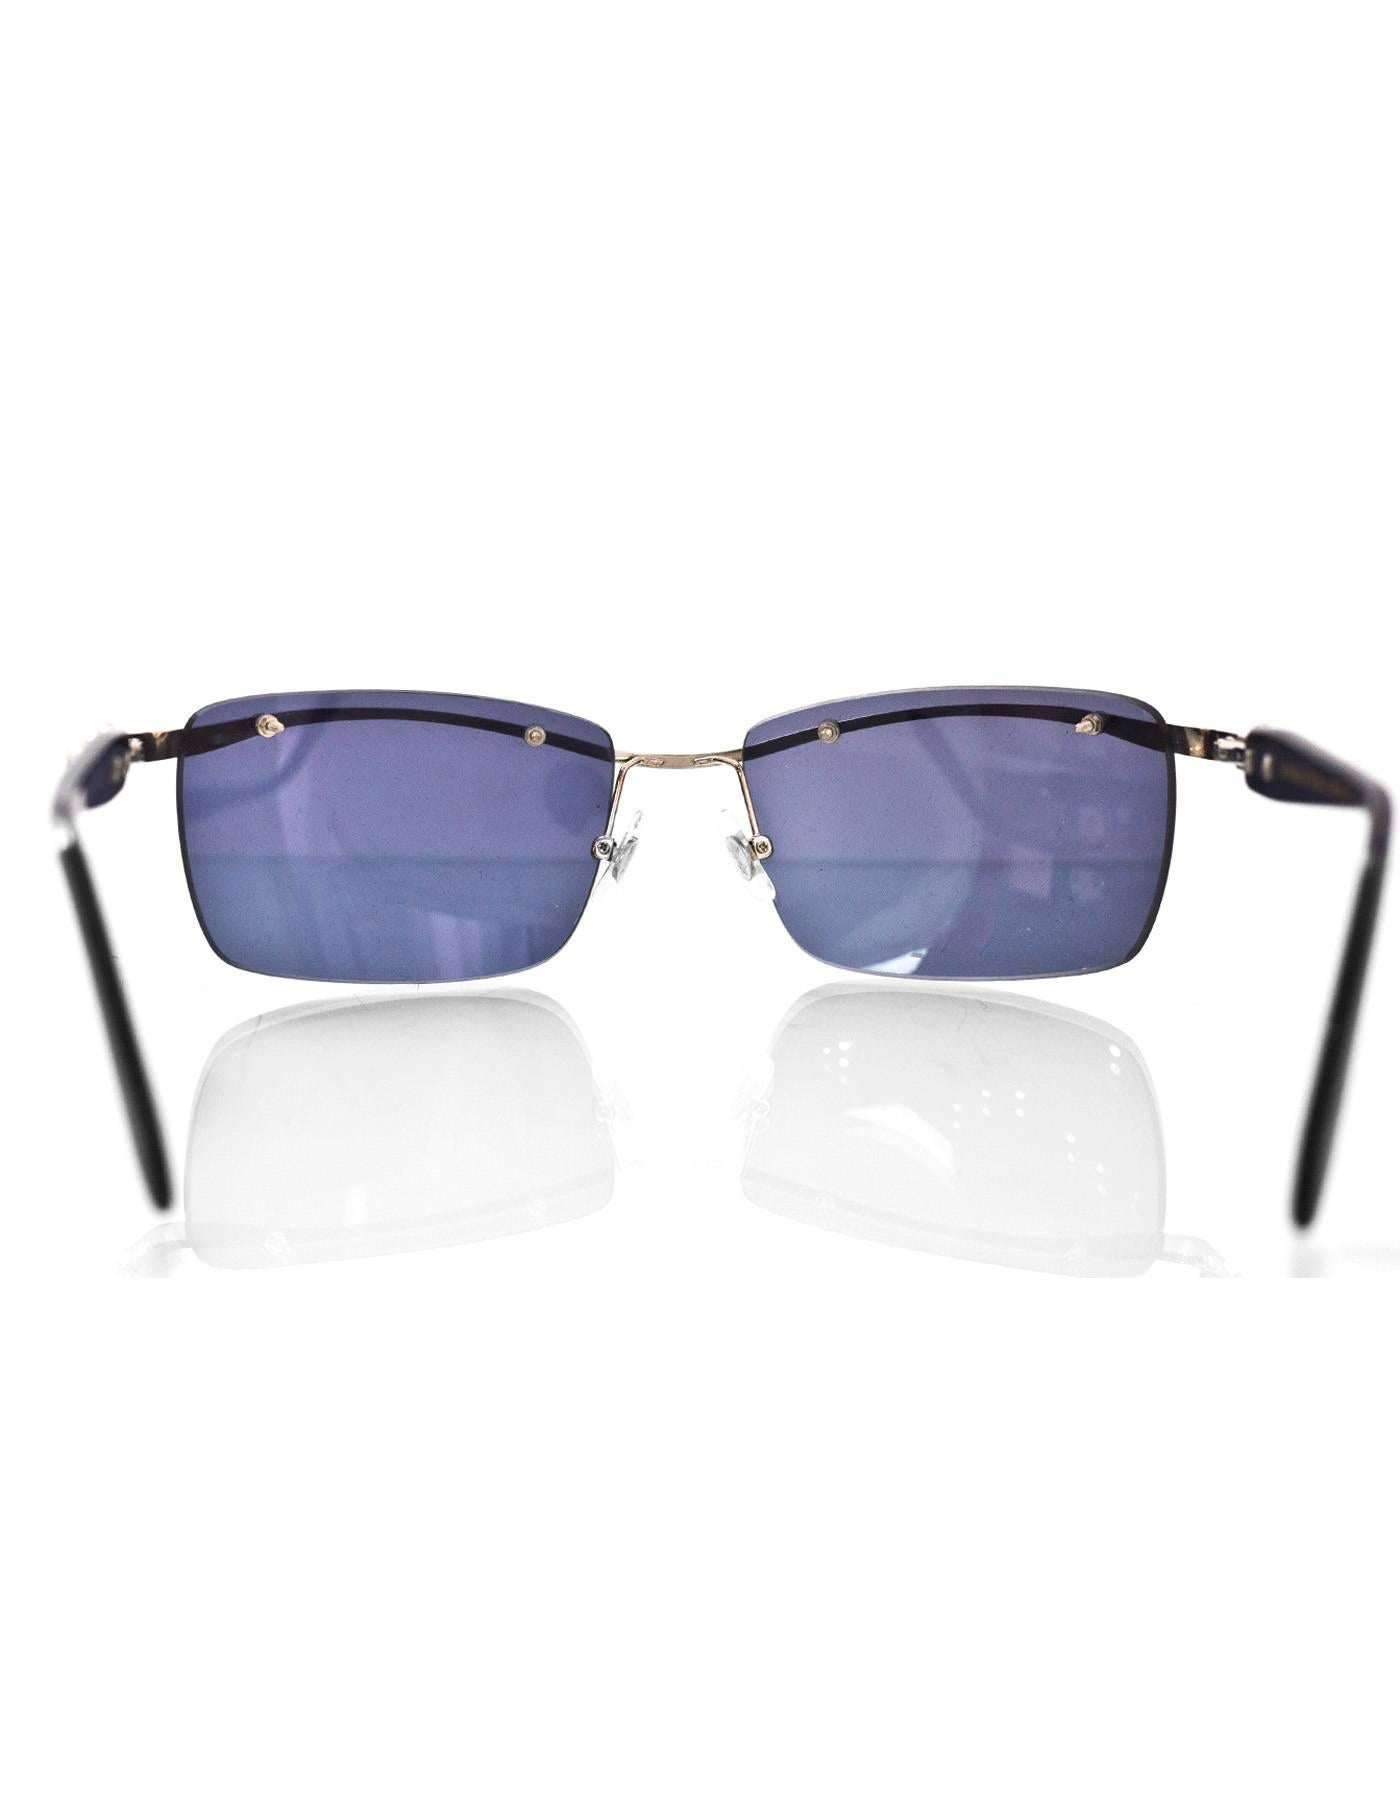 Women's or Men's Kieselstein-Cord Black Super Star Mirrored Sunglasses with Case